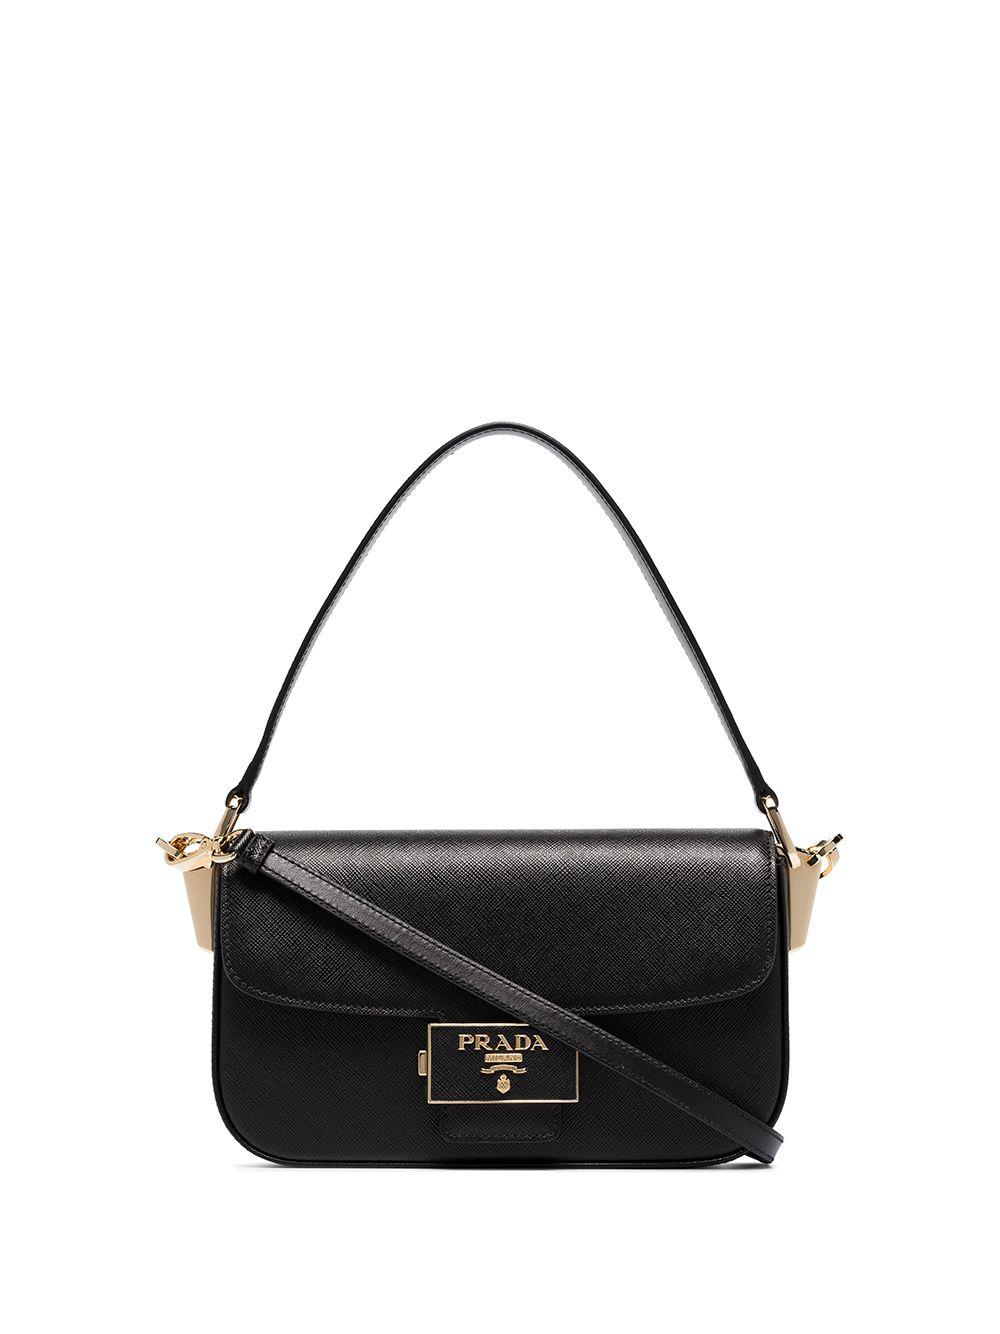 Prada Emblème Saffiano Leather Baguette Bag in Black | Lyst